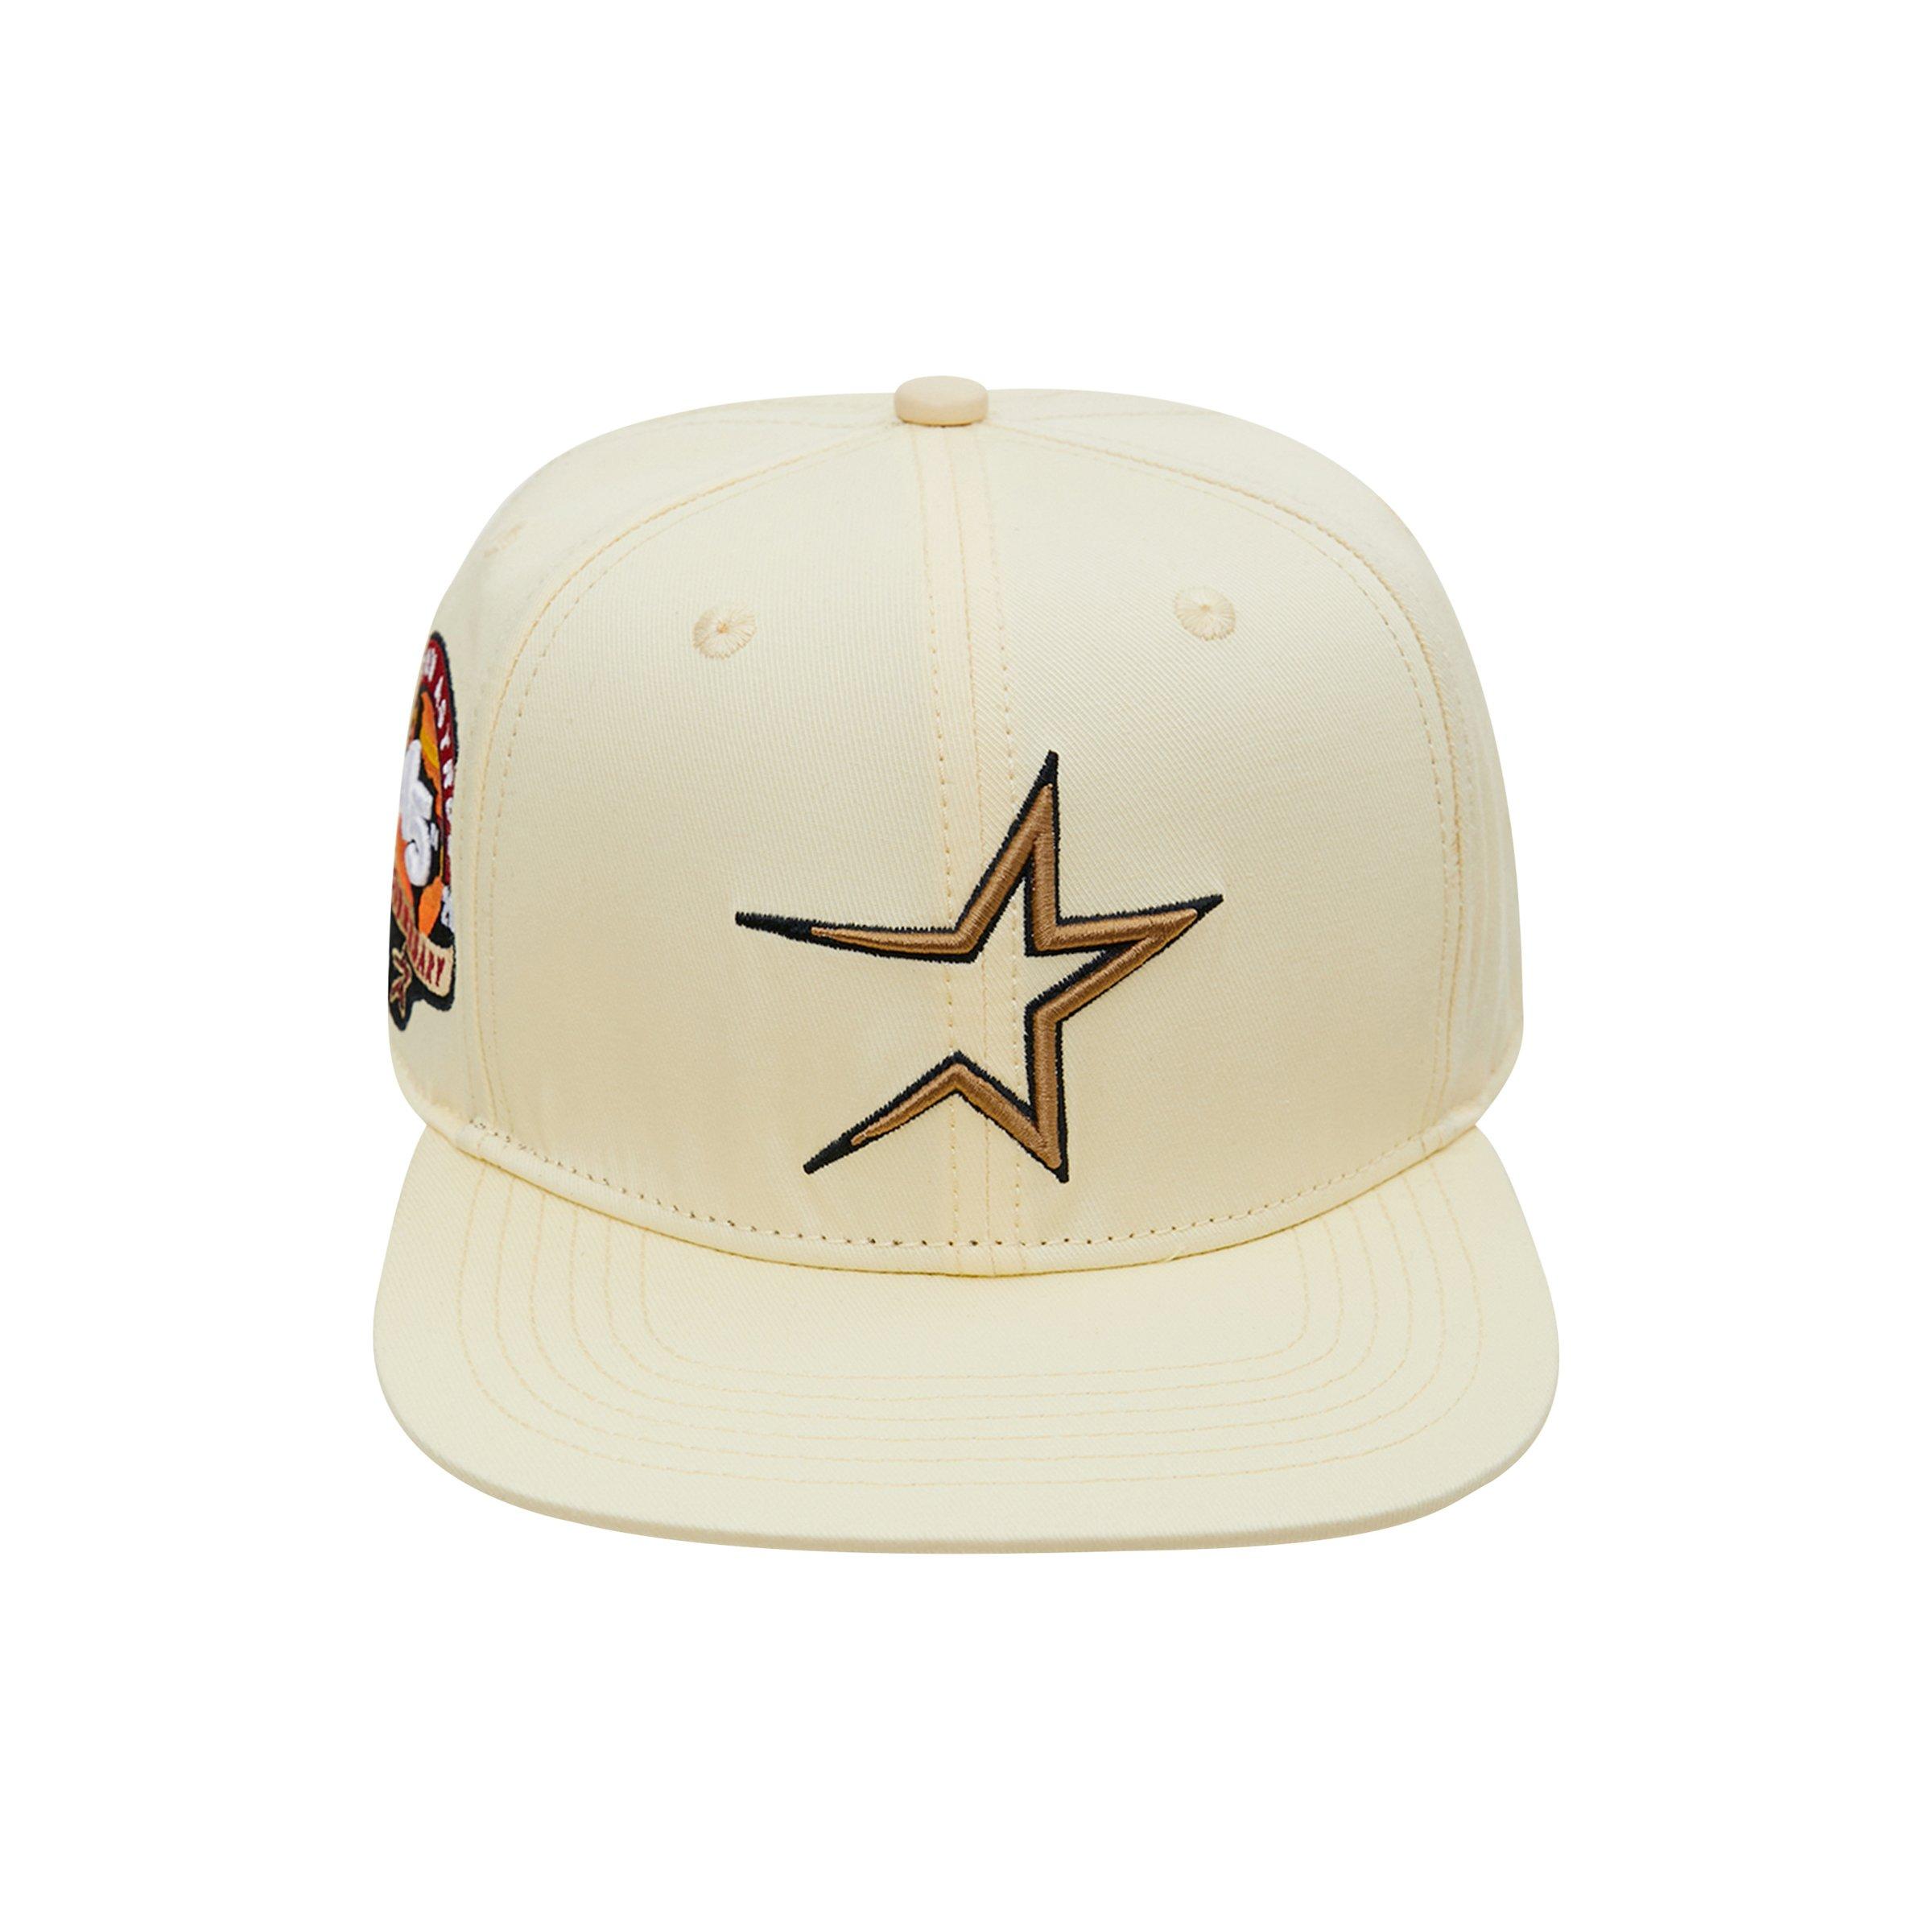 Vintage Houston Astros Girl's Youth Baseball Hat NWT 